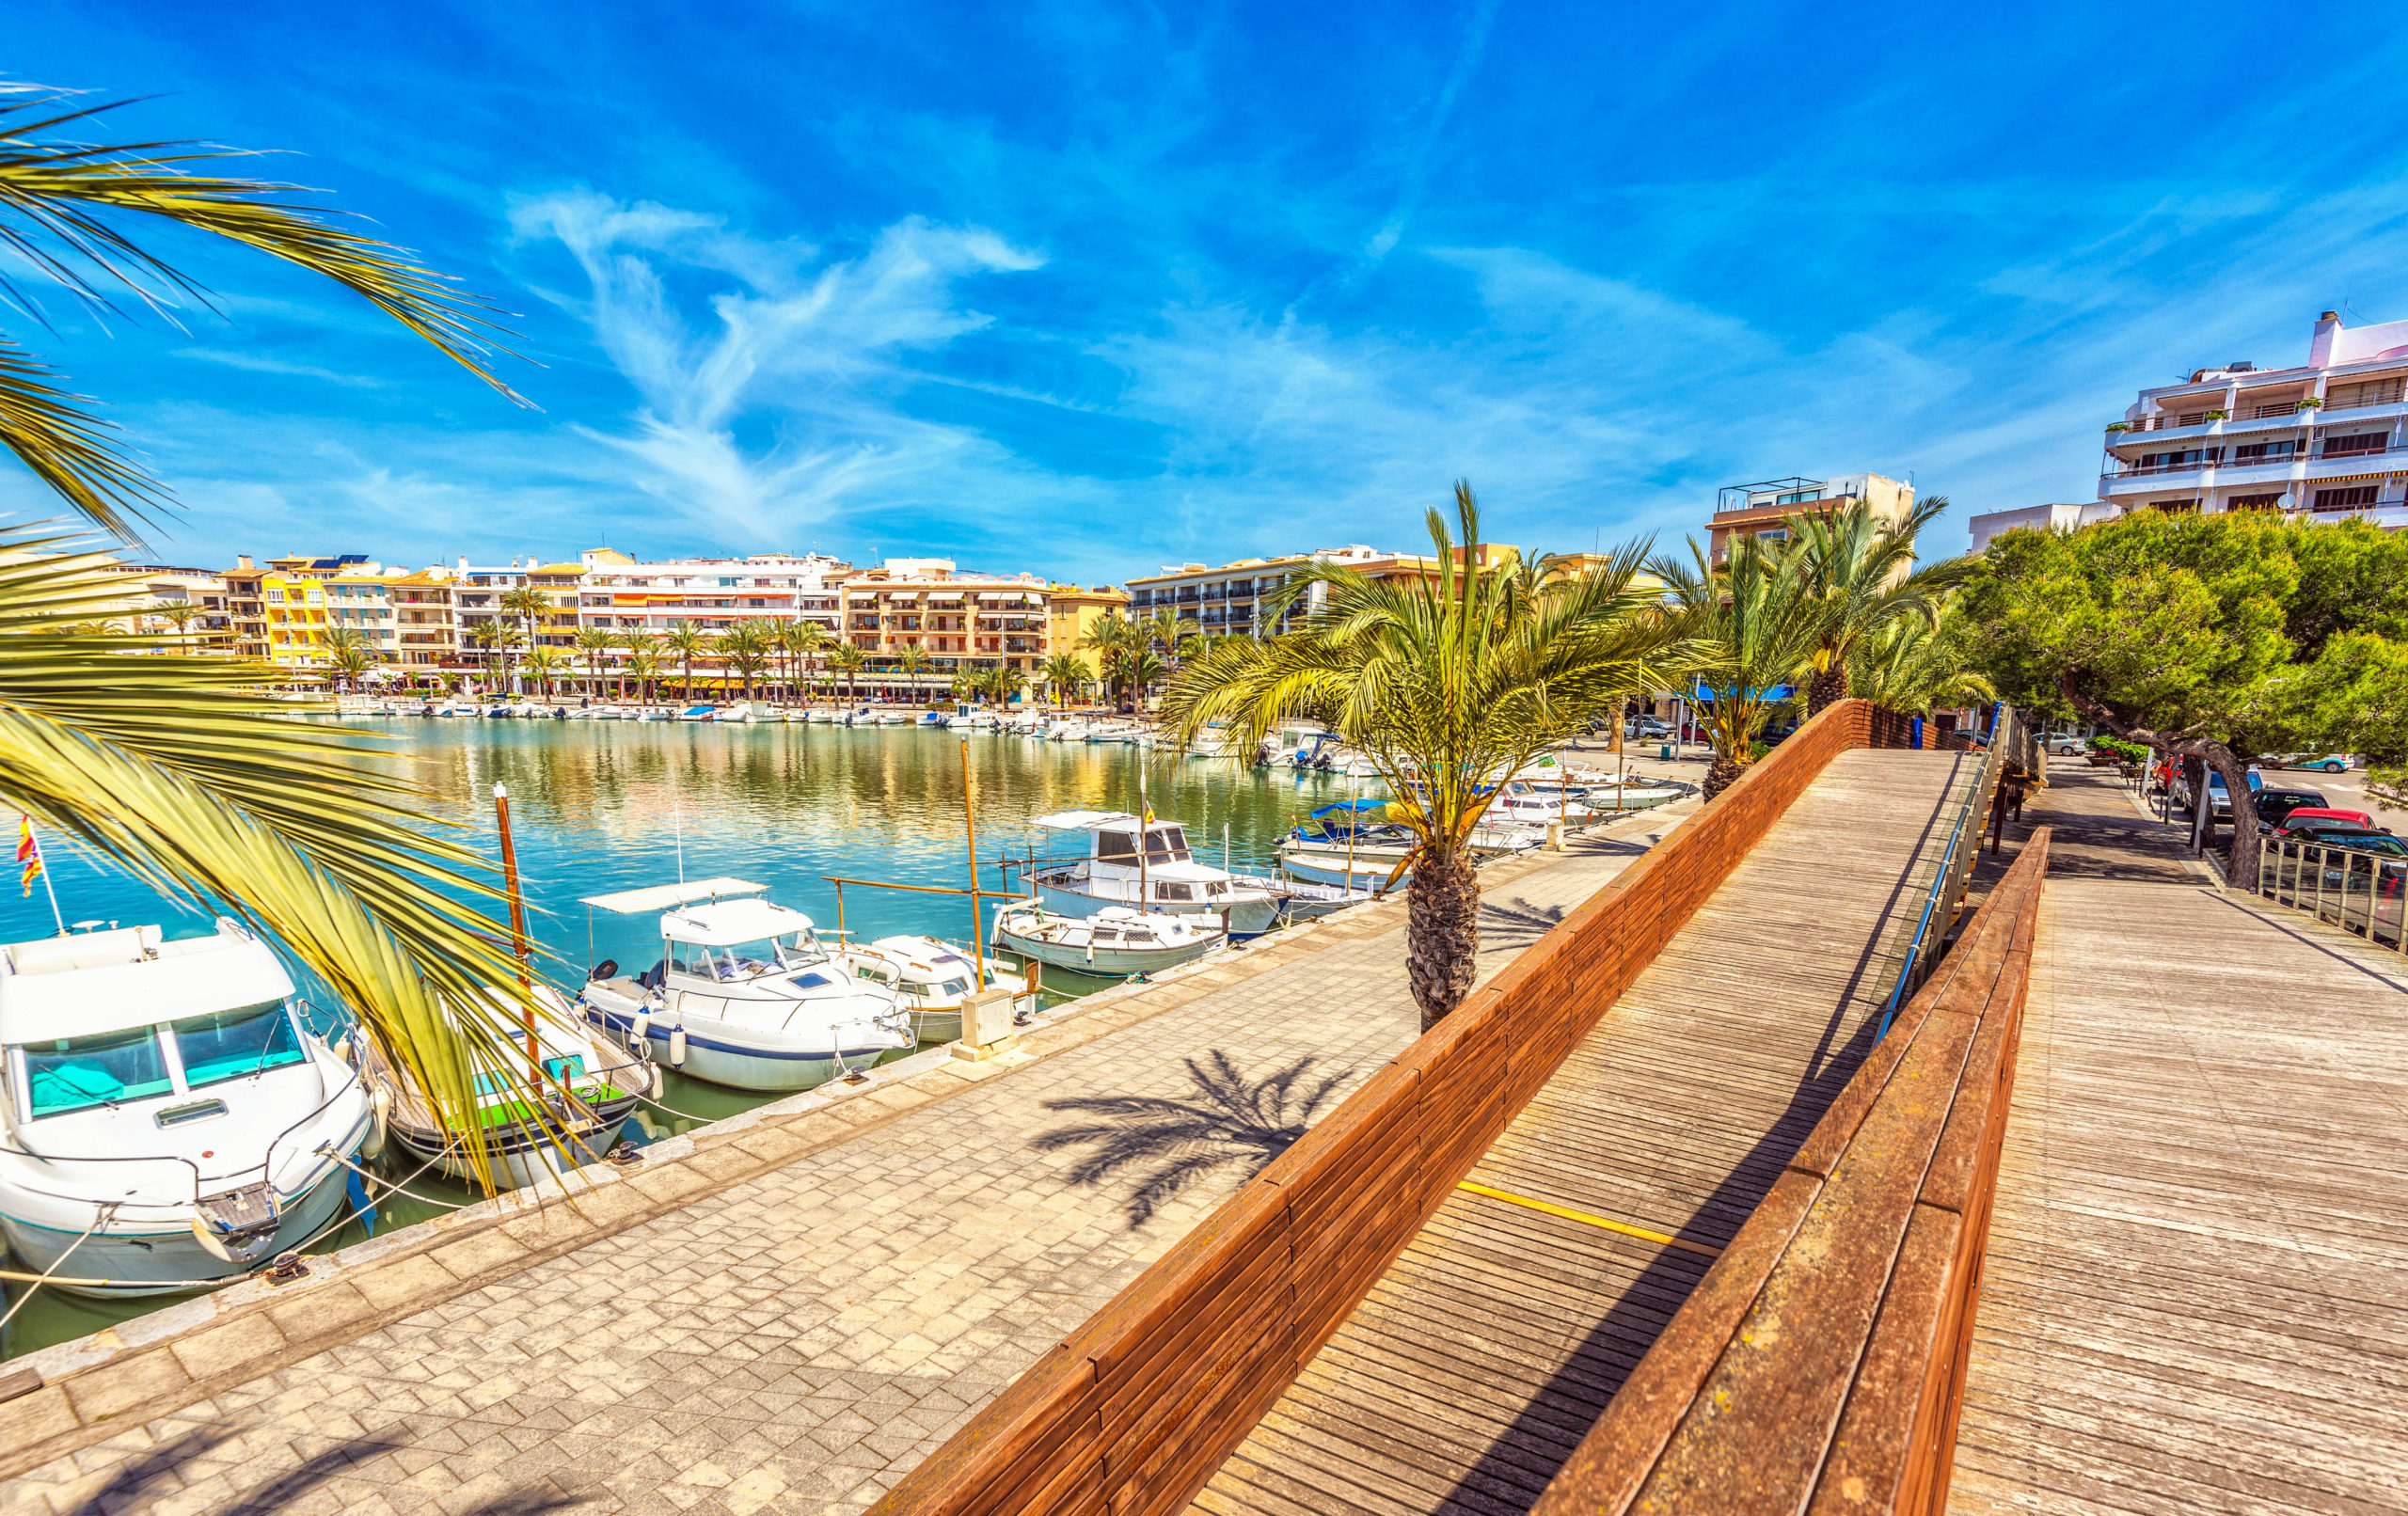 The promenade, harbour and water front of Port de Alcudia, Mallorca (Spain)